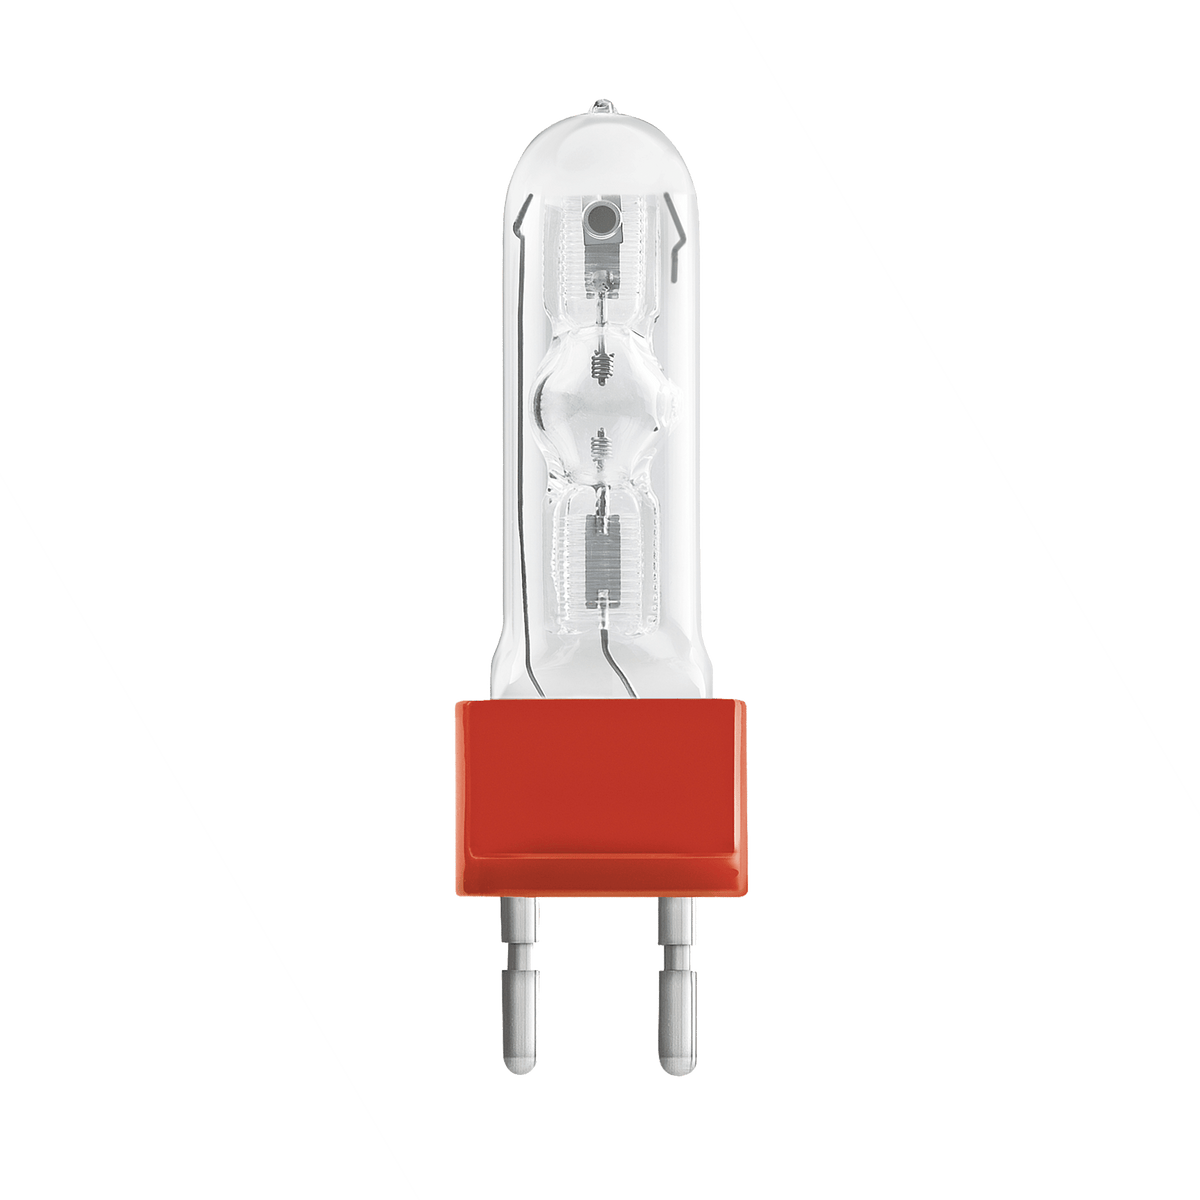 OSRAM HMI 800W/SEL UVS G22 Lamp